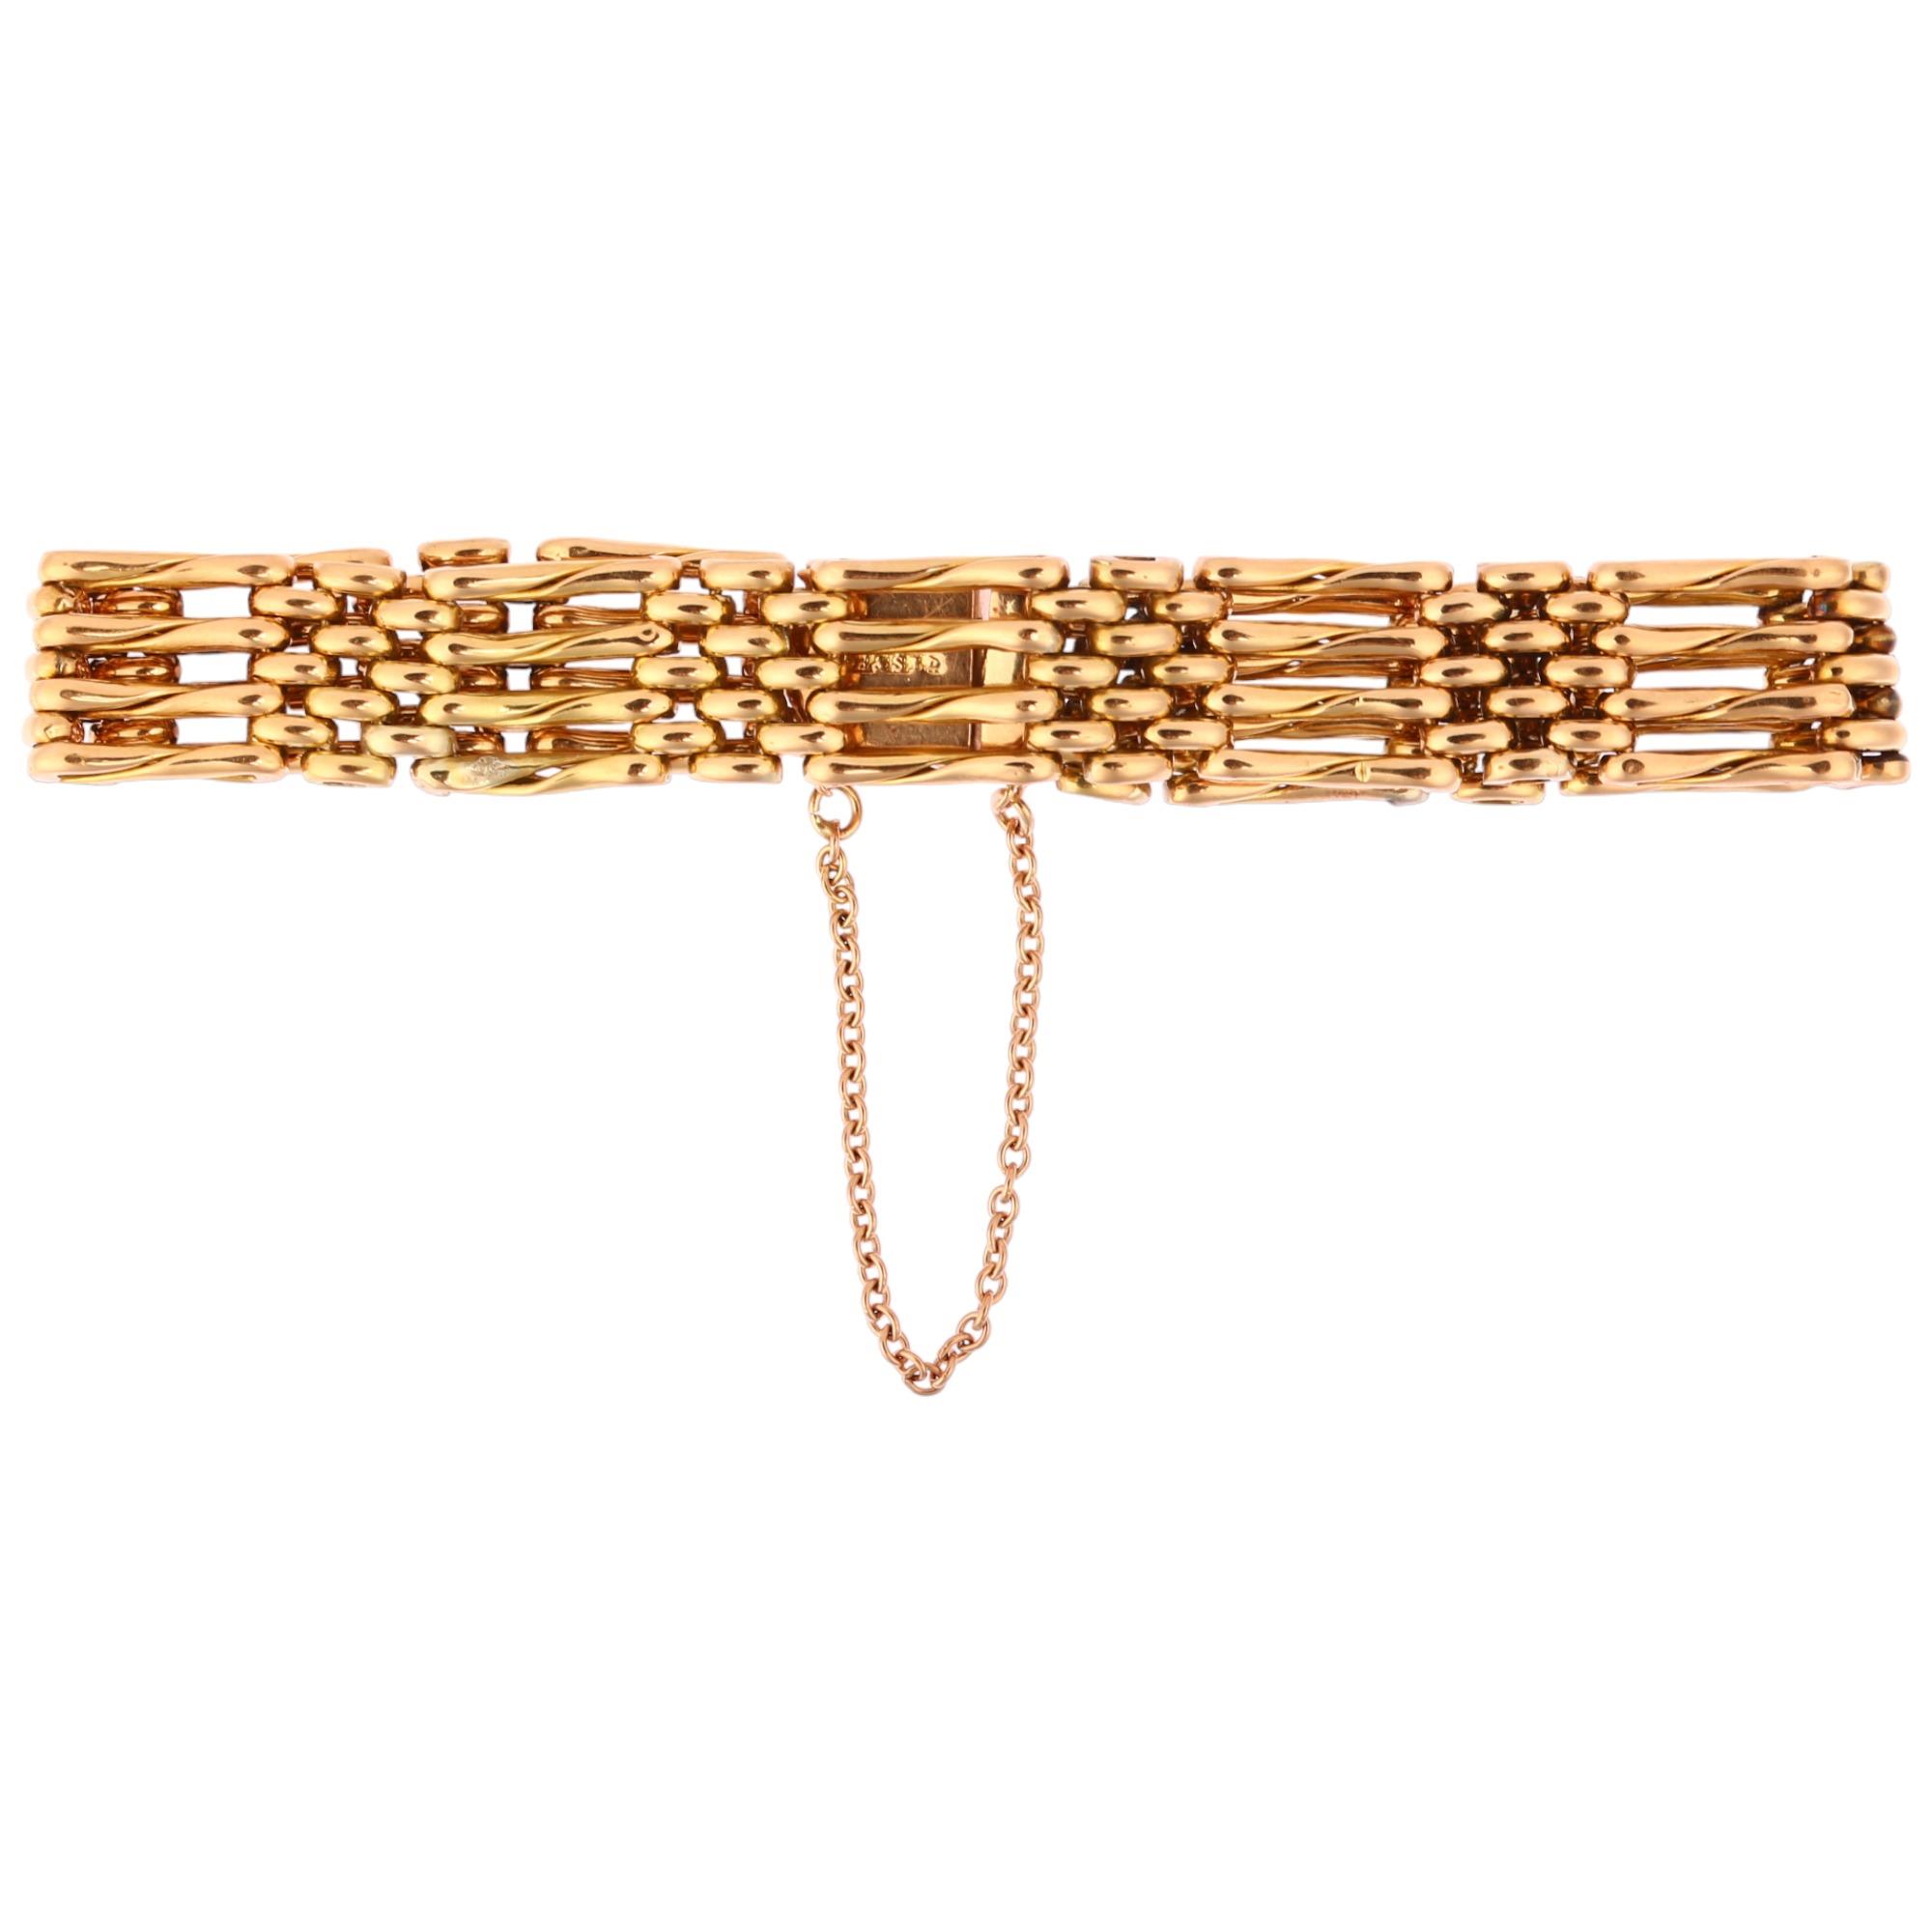 An early 20th century 15ct rose gold gatelink chain bracelet, maker SB&S Ltd, band width 11.6mm,